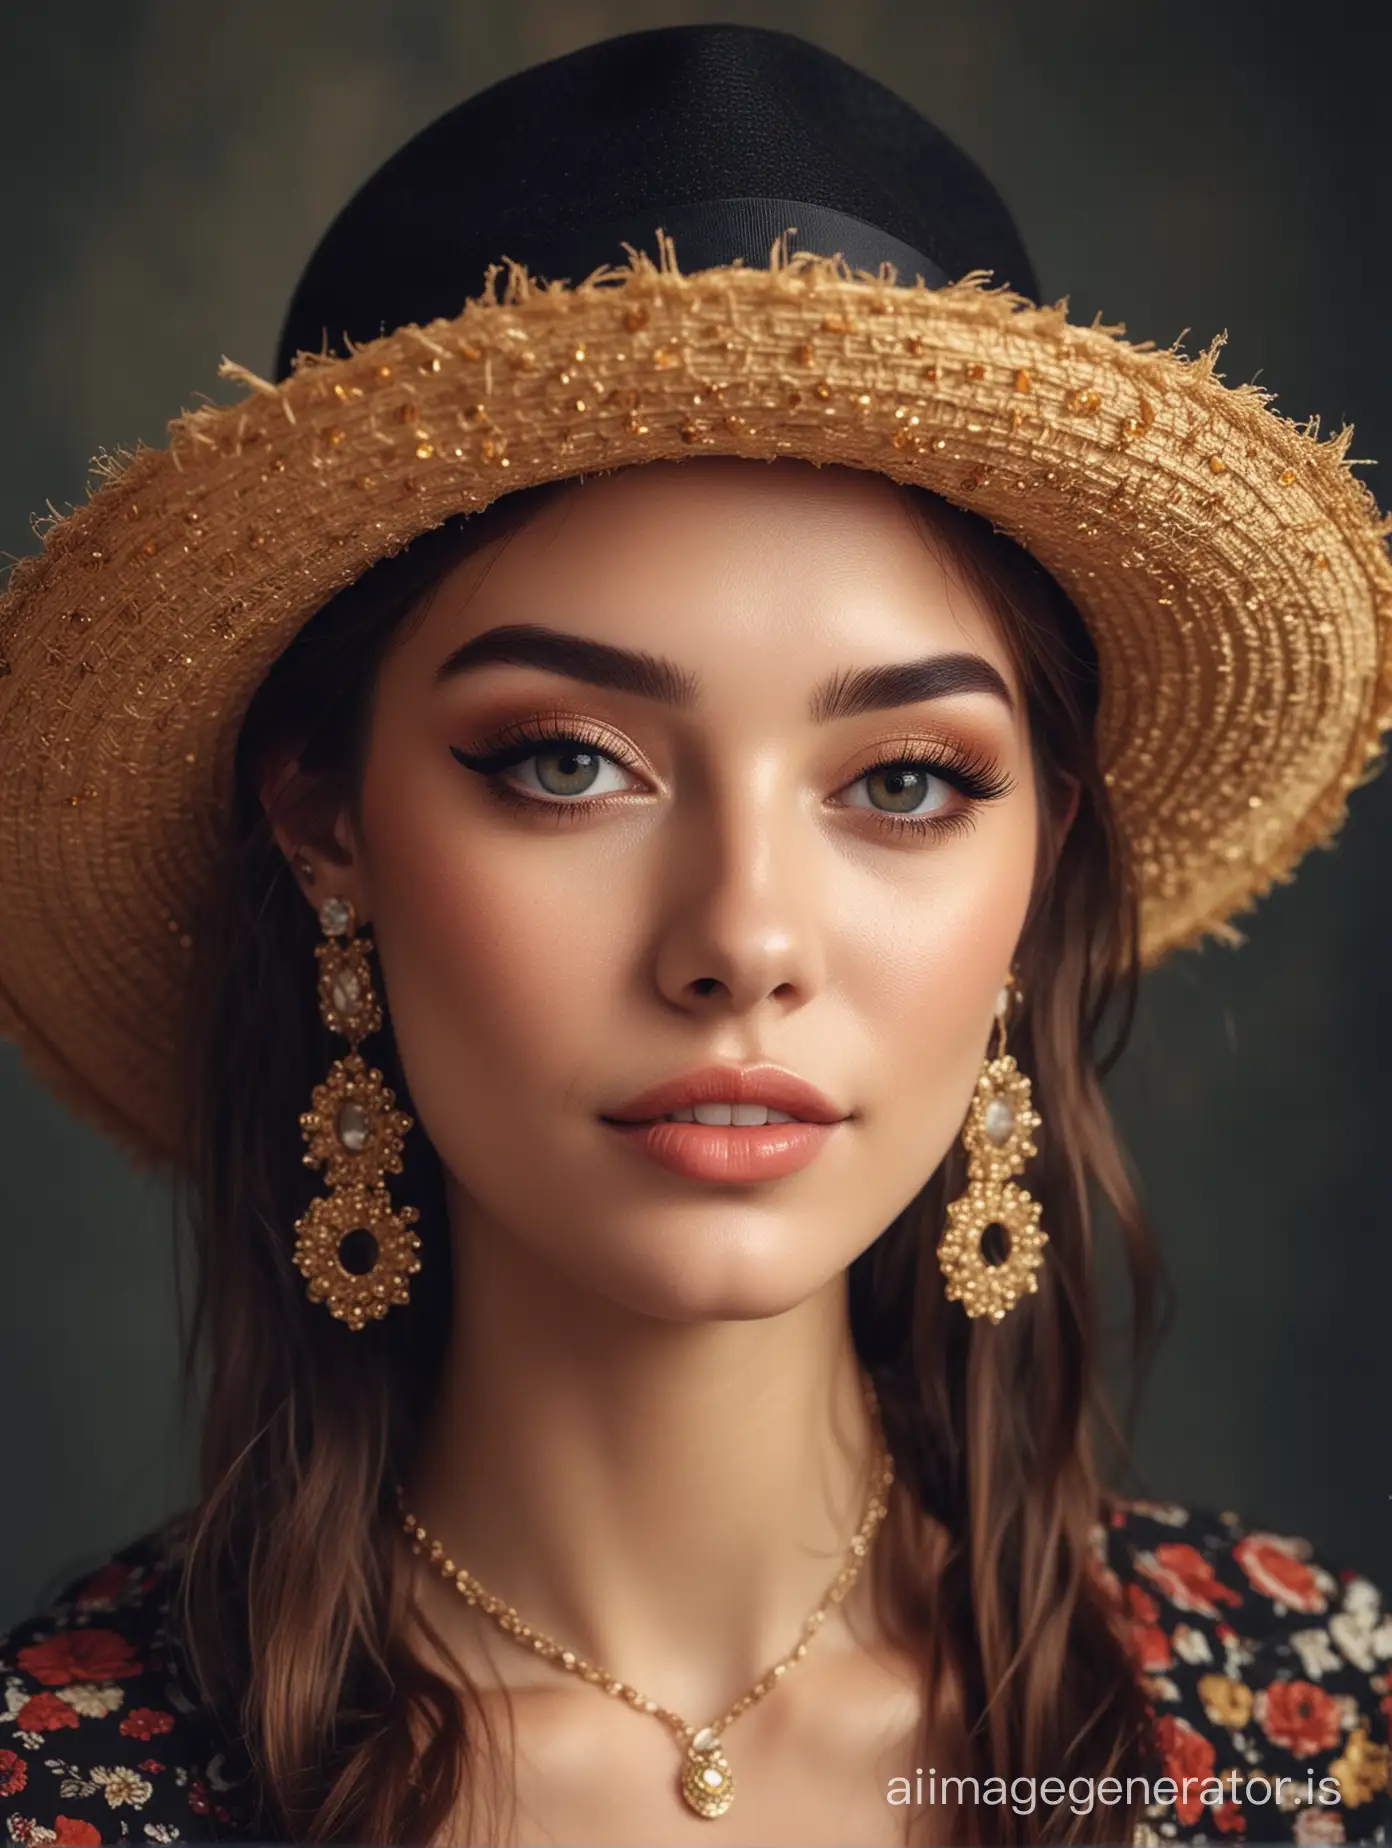 Glamorous-Honeycore-Girl-in-Dolce-Gabbana-Inspired-Makeup